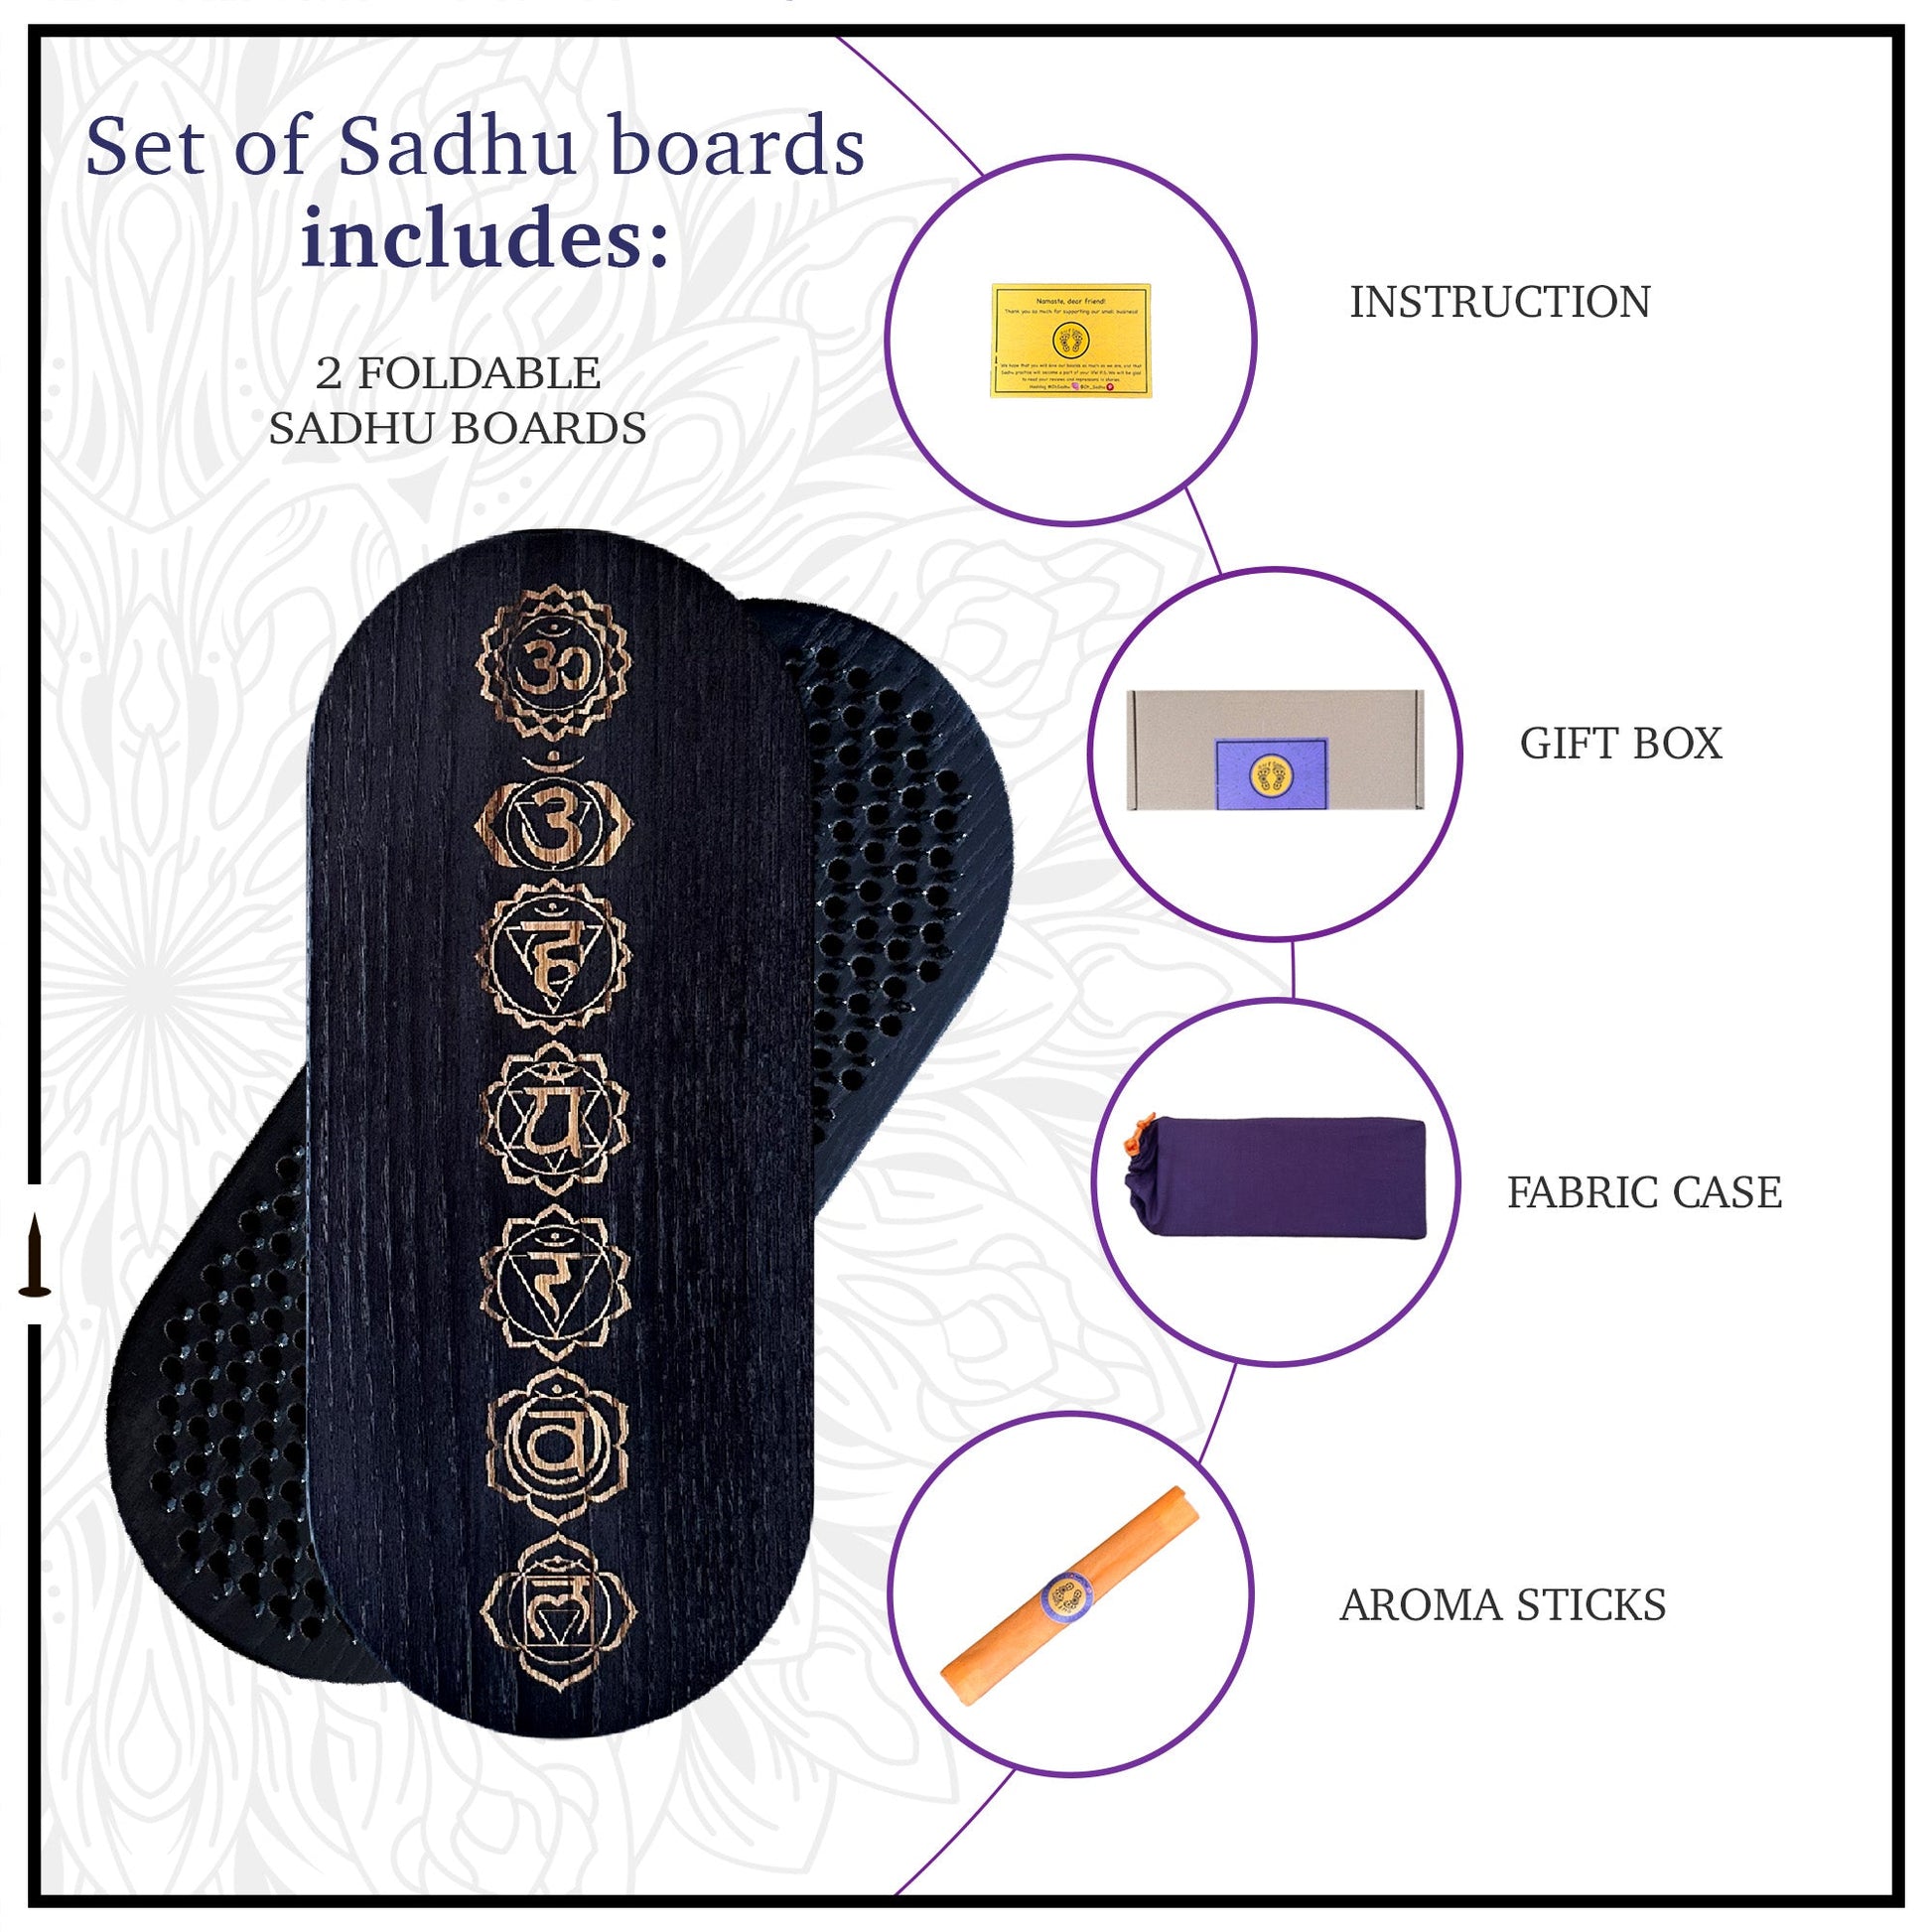 sadhu board set includes pouch, box, aroma stick, instruction